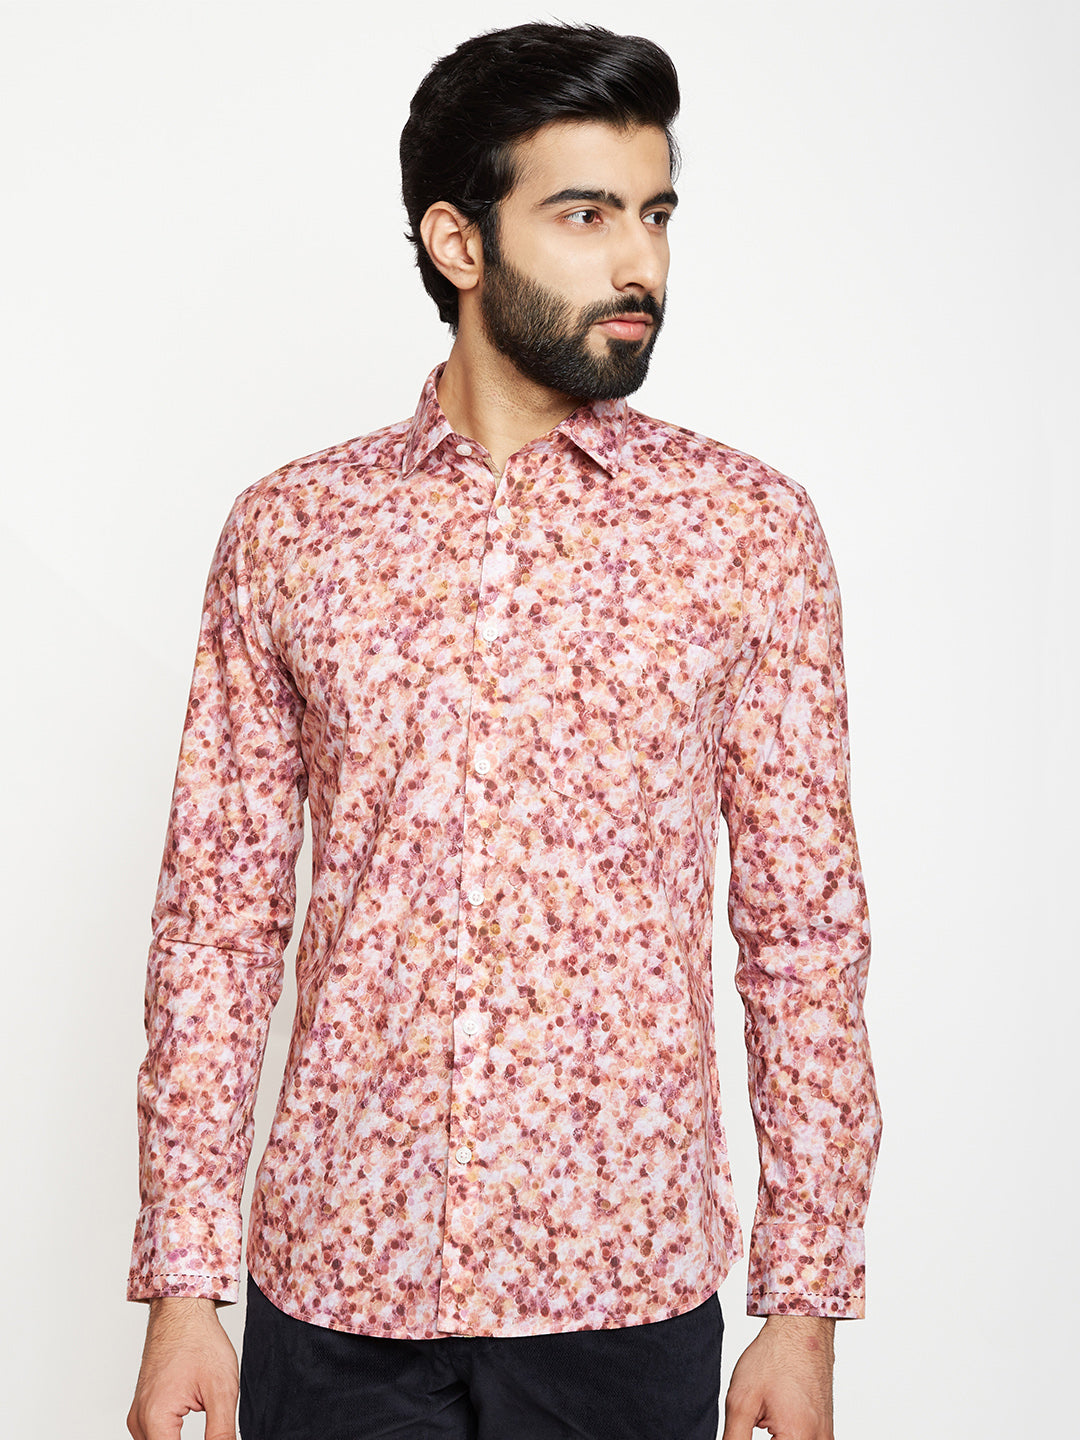 Multicolour Printed Slim Fit shirt - Men Shirts